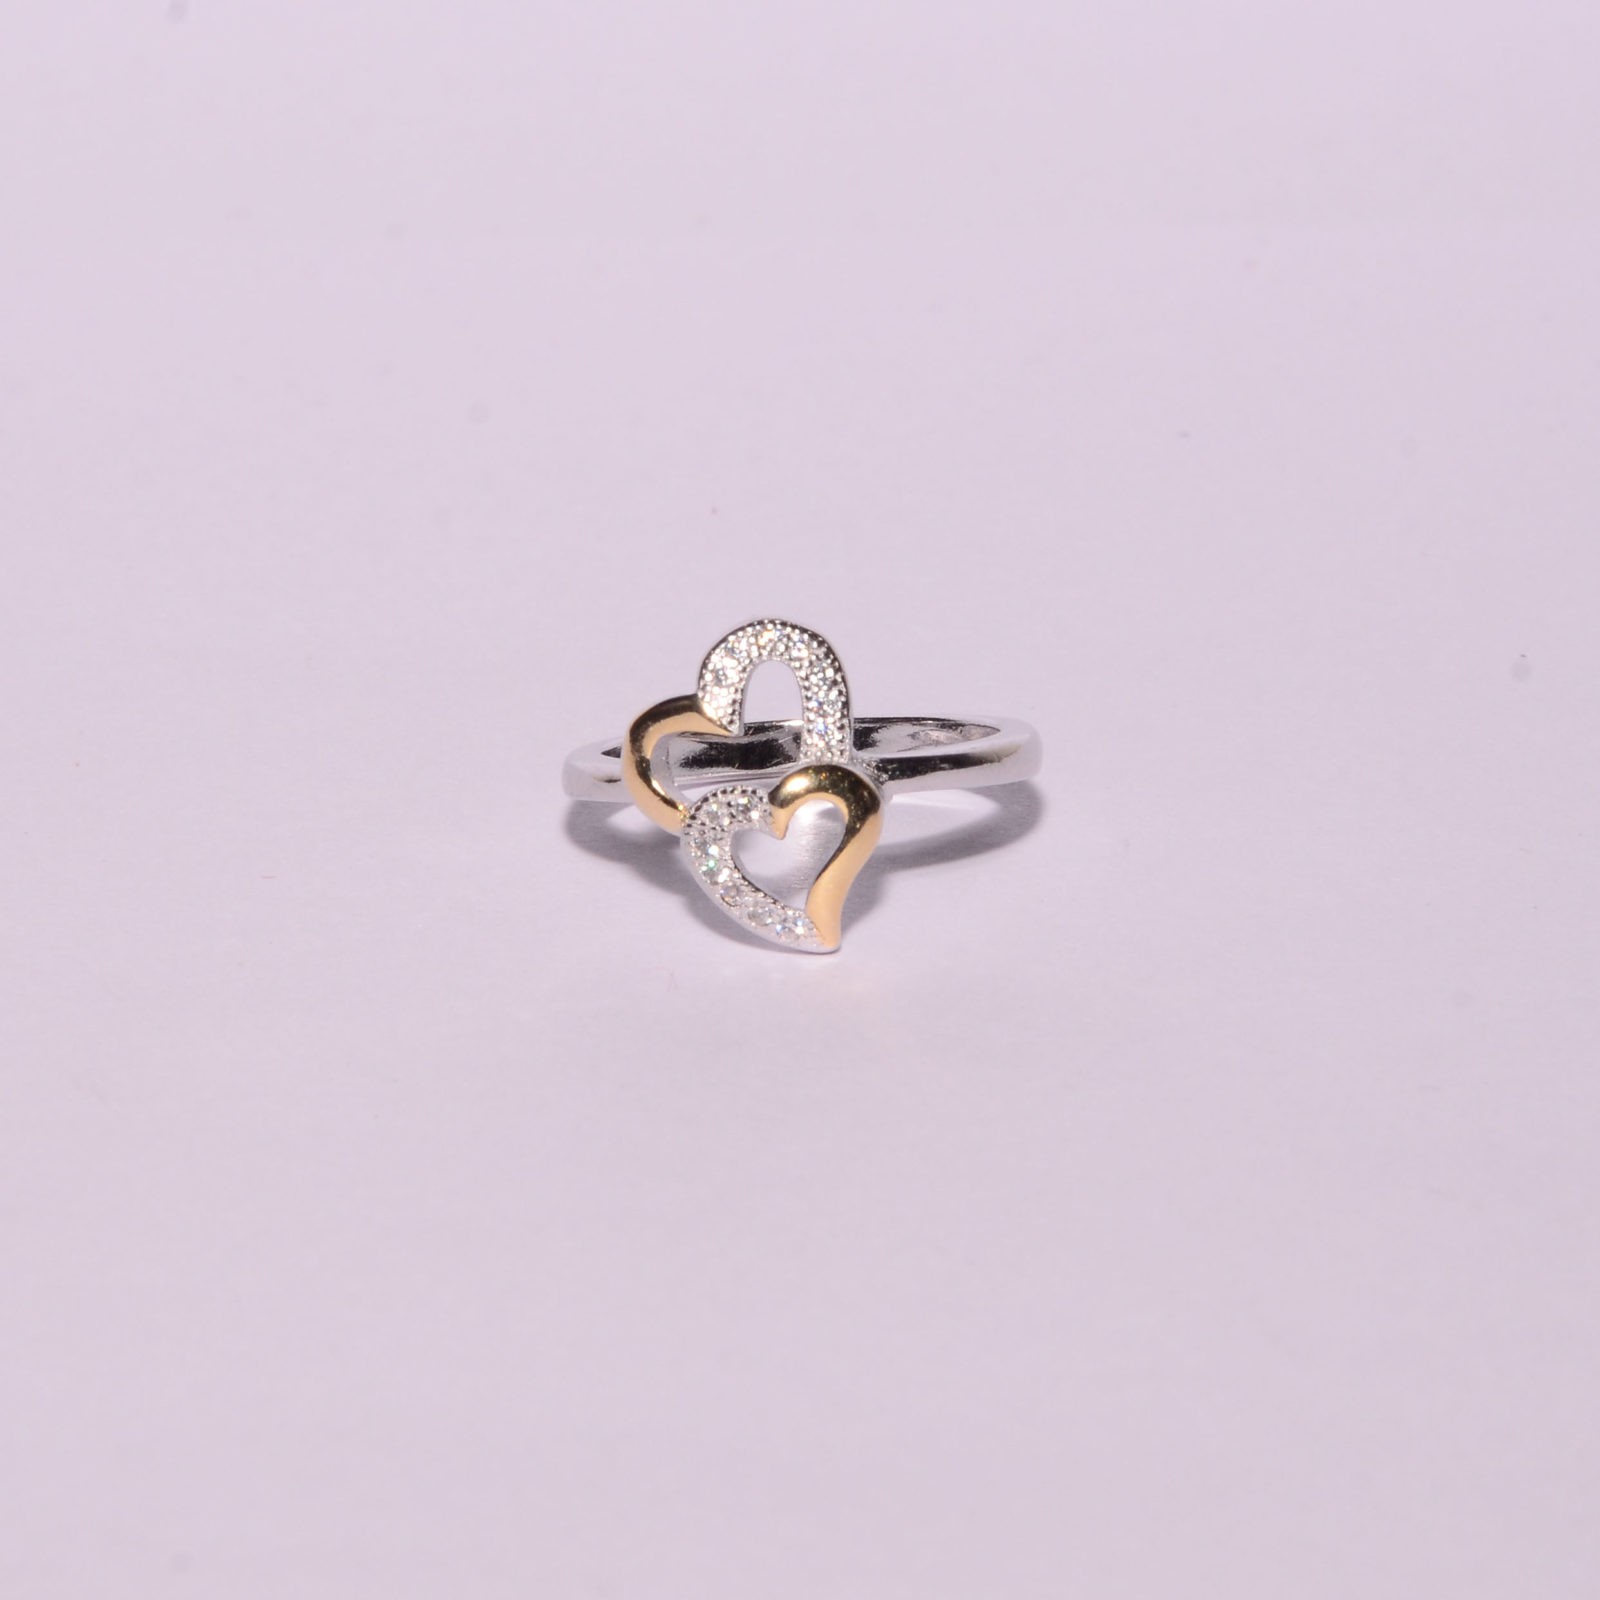 Large Sterling Silver Rings | Cute Sterling Silver Rings